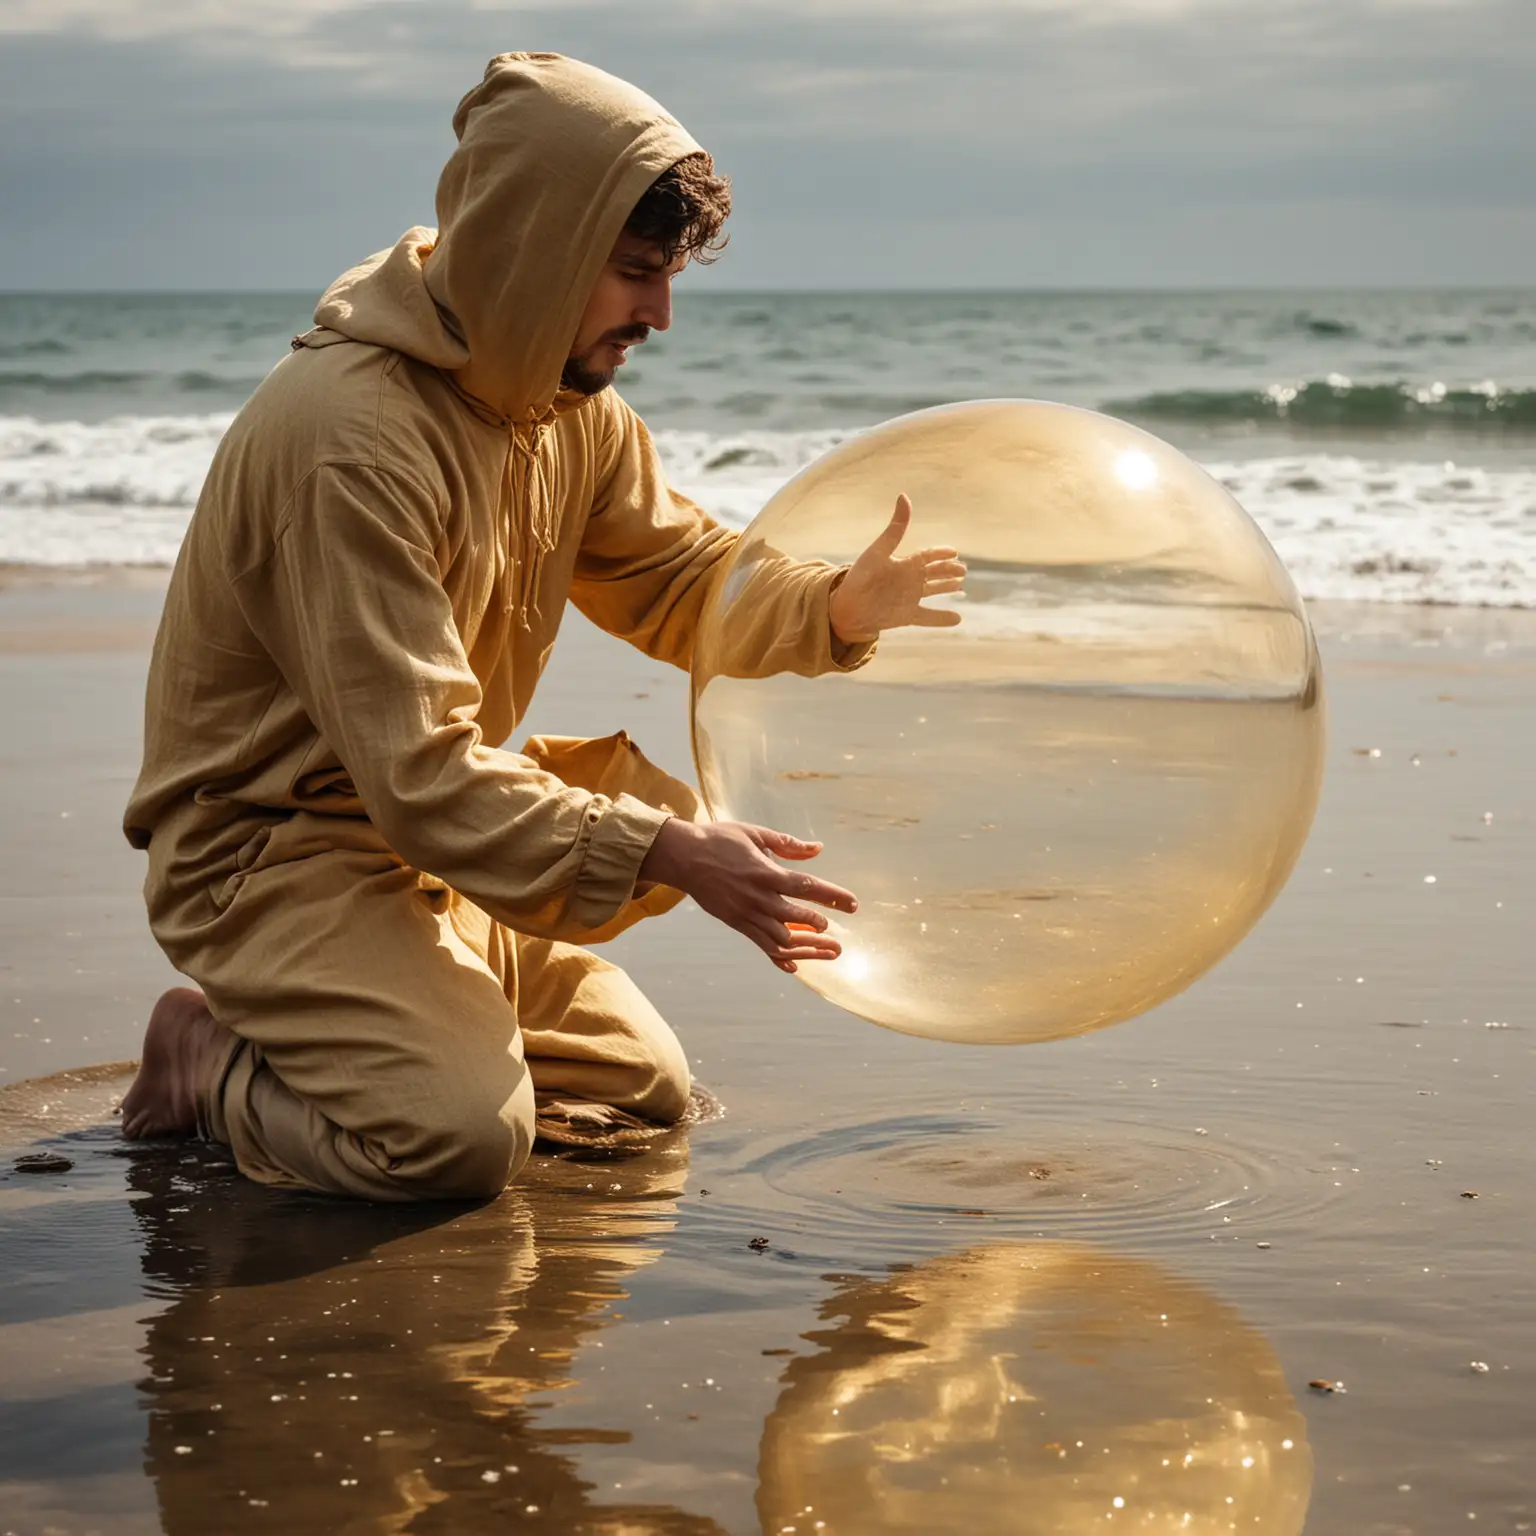 Man in Golden Tunic Kneeling by Reflective Bubble on Seashore